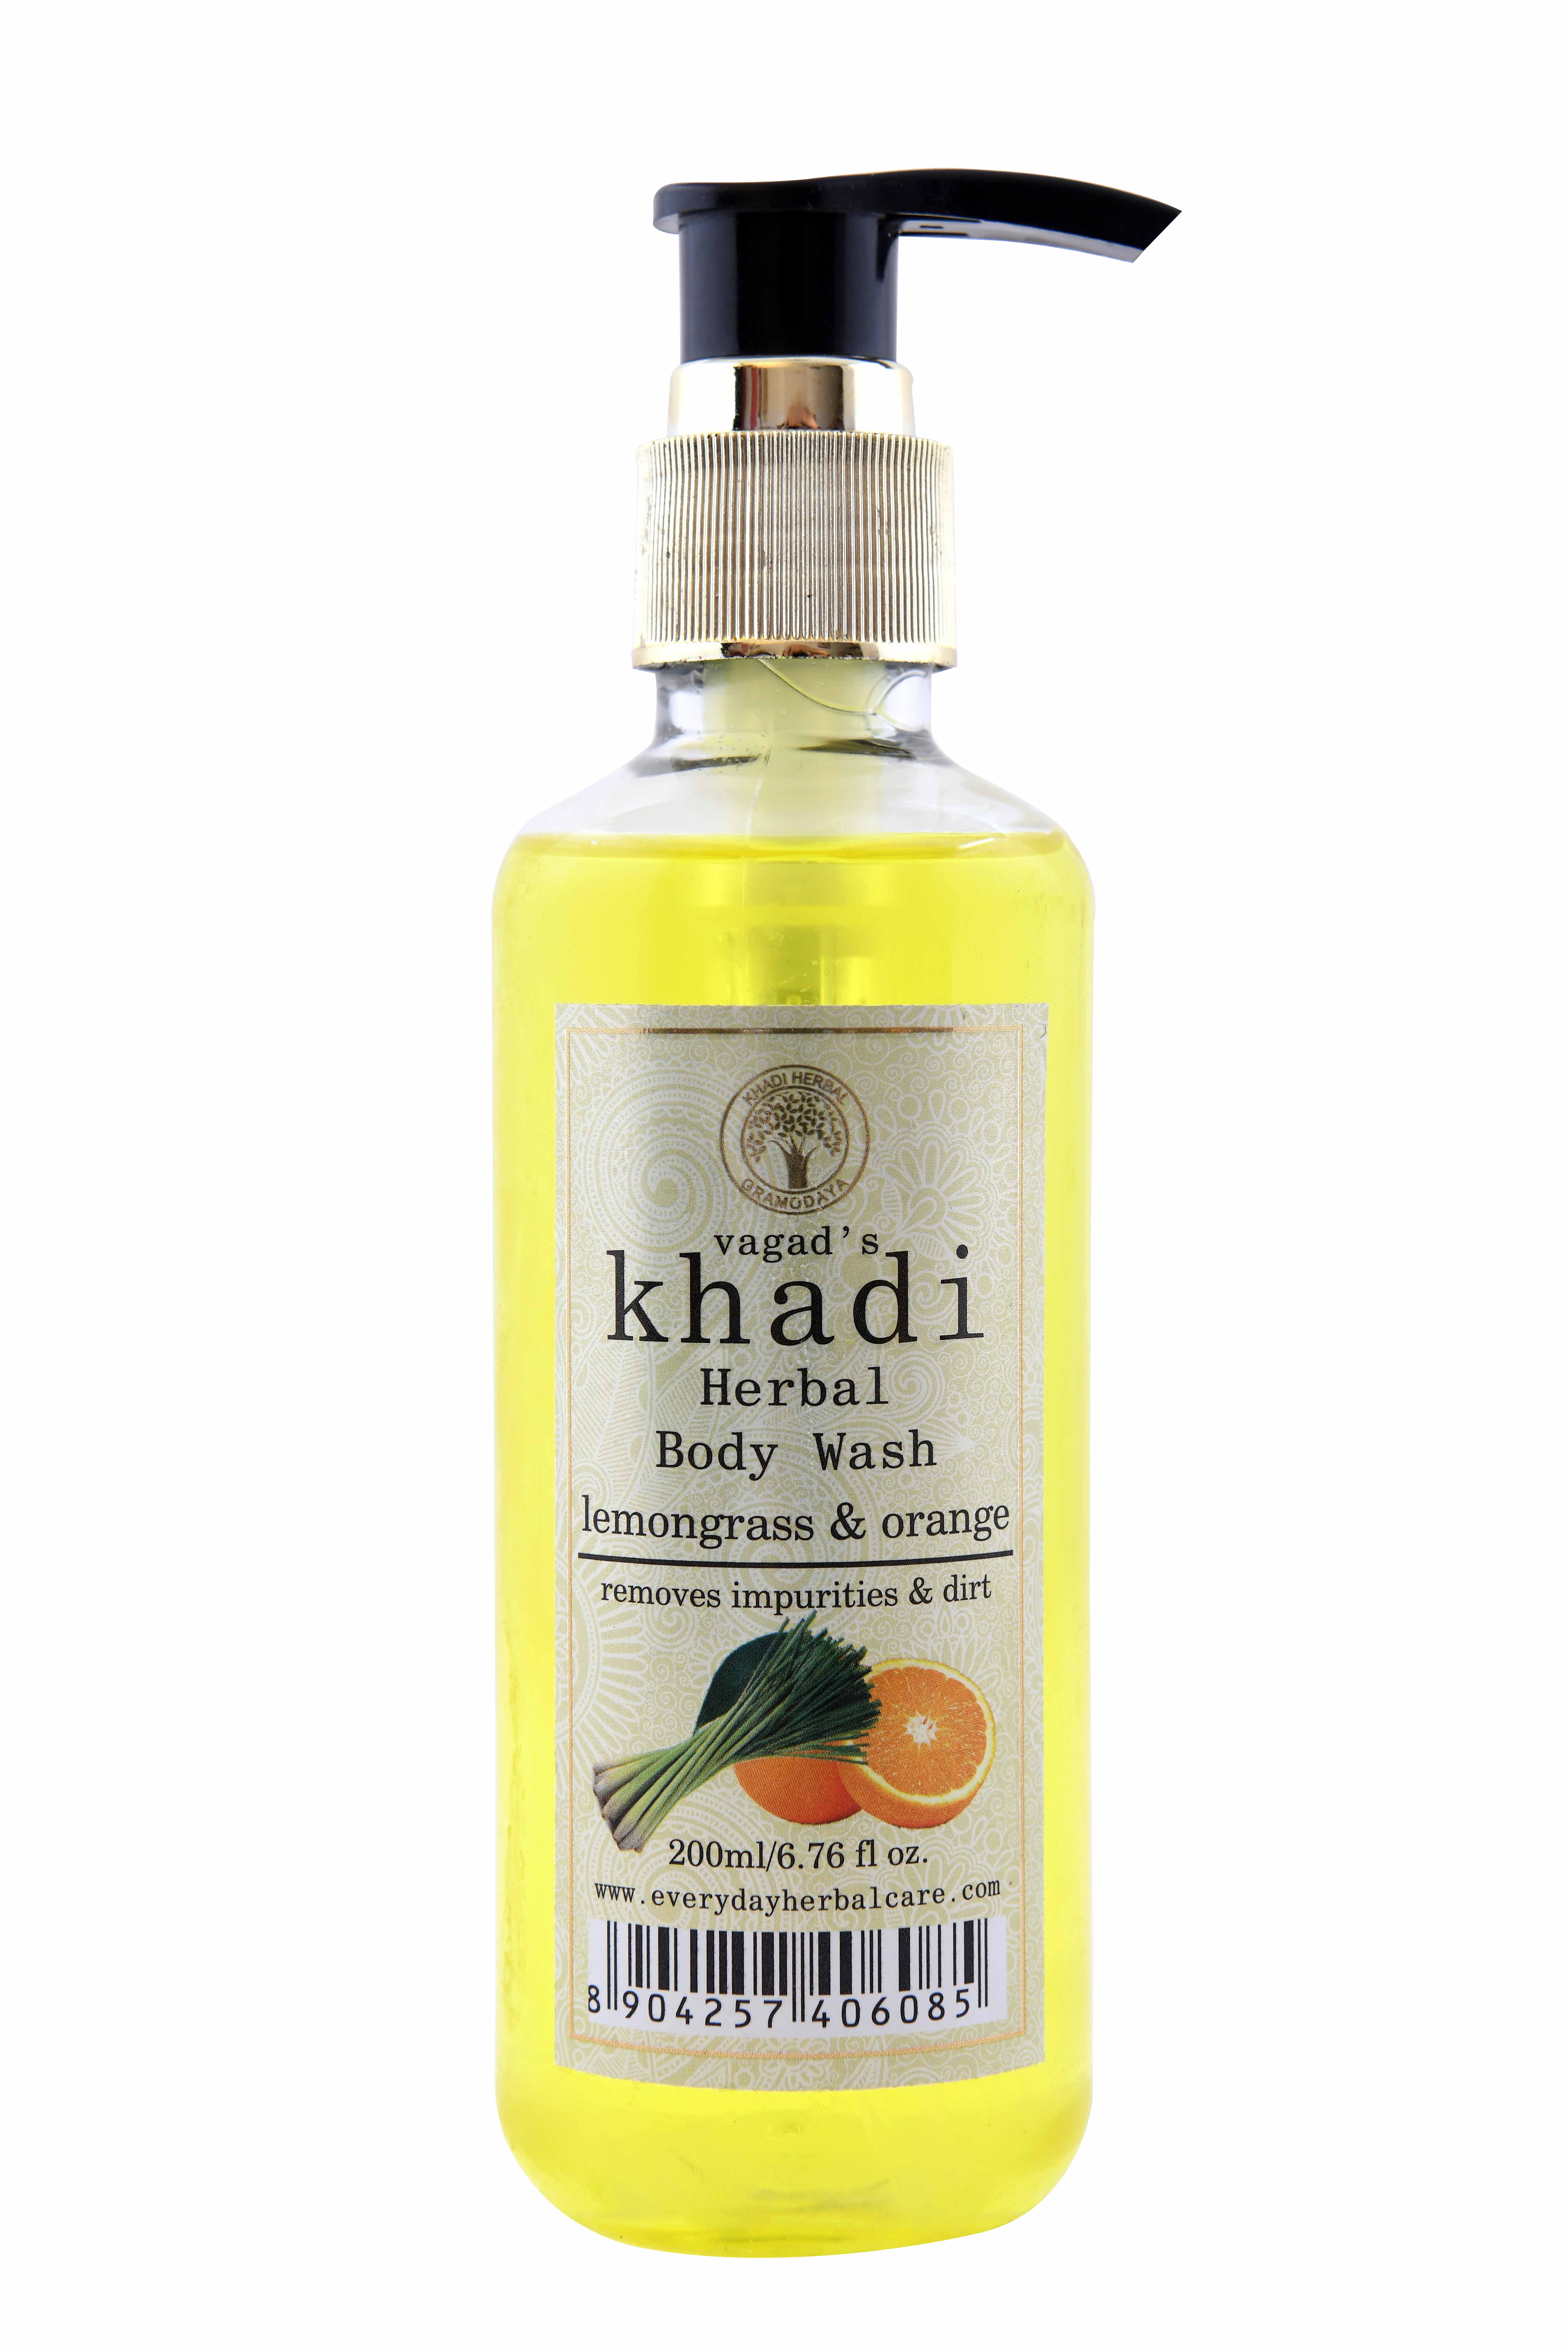 Buy Vagad's Khadi Lemongrass And Orange Body Wash at Best Price Online